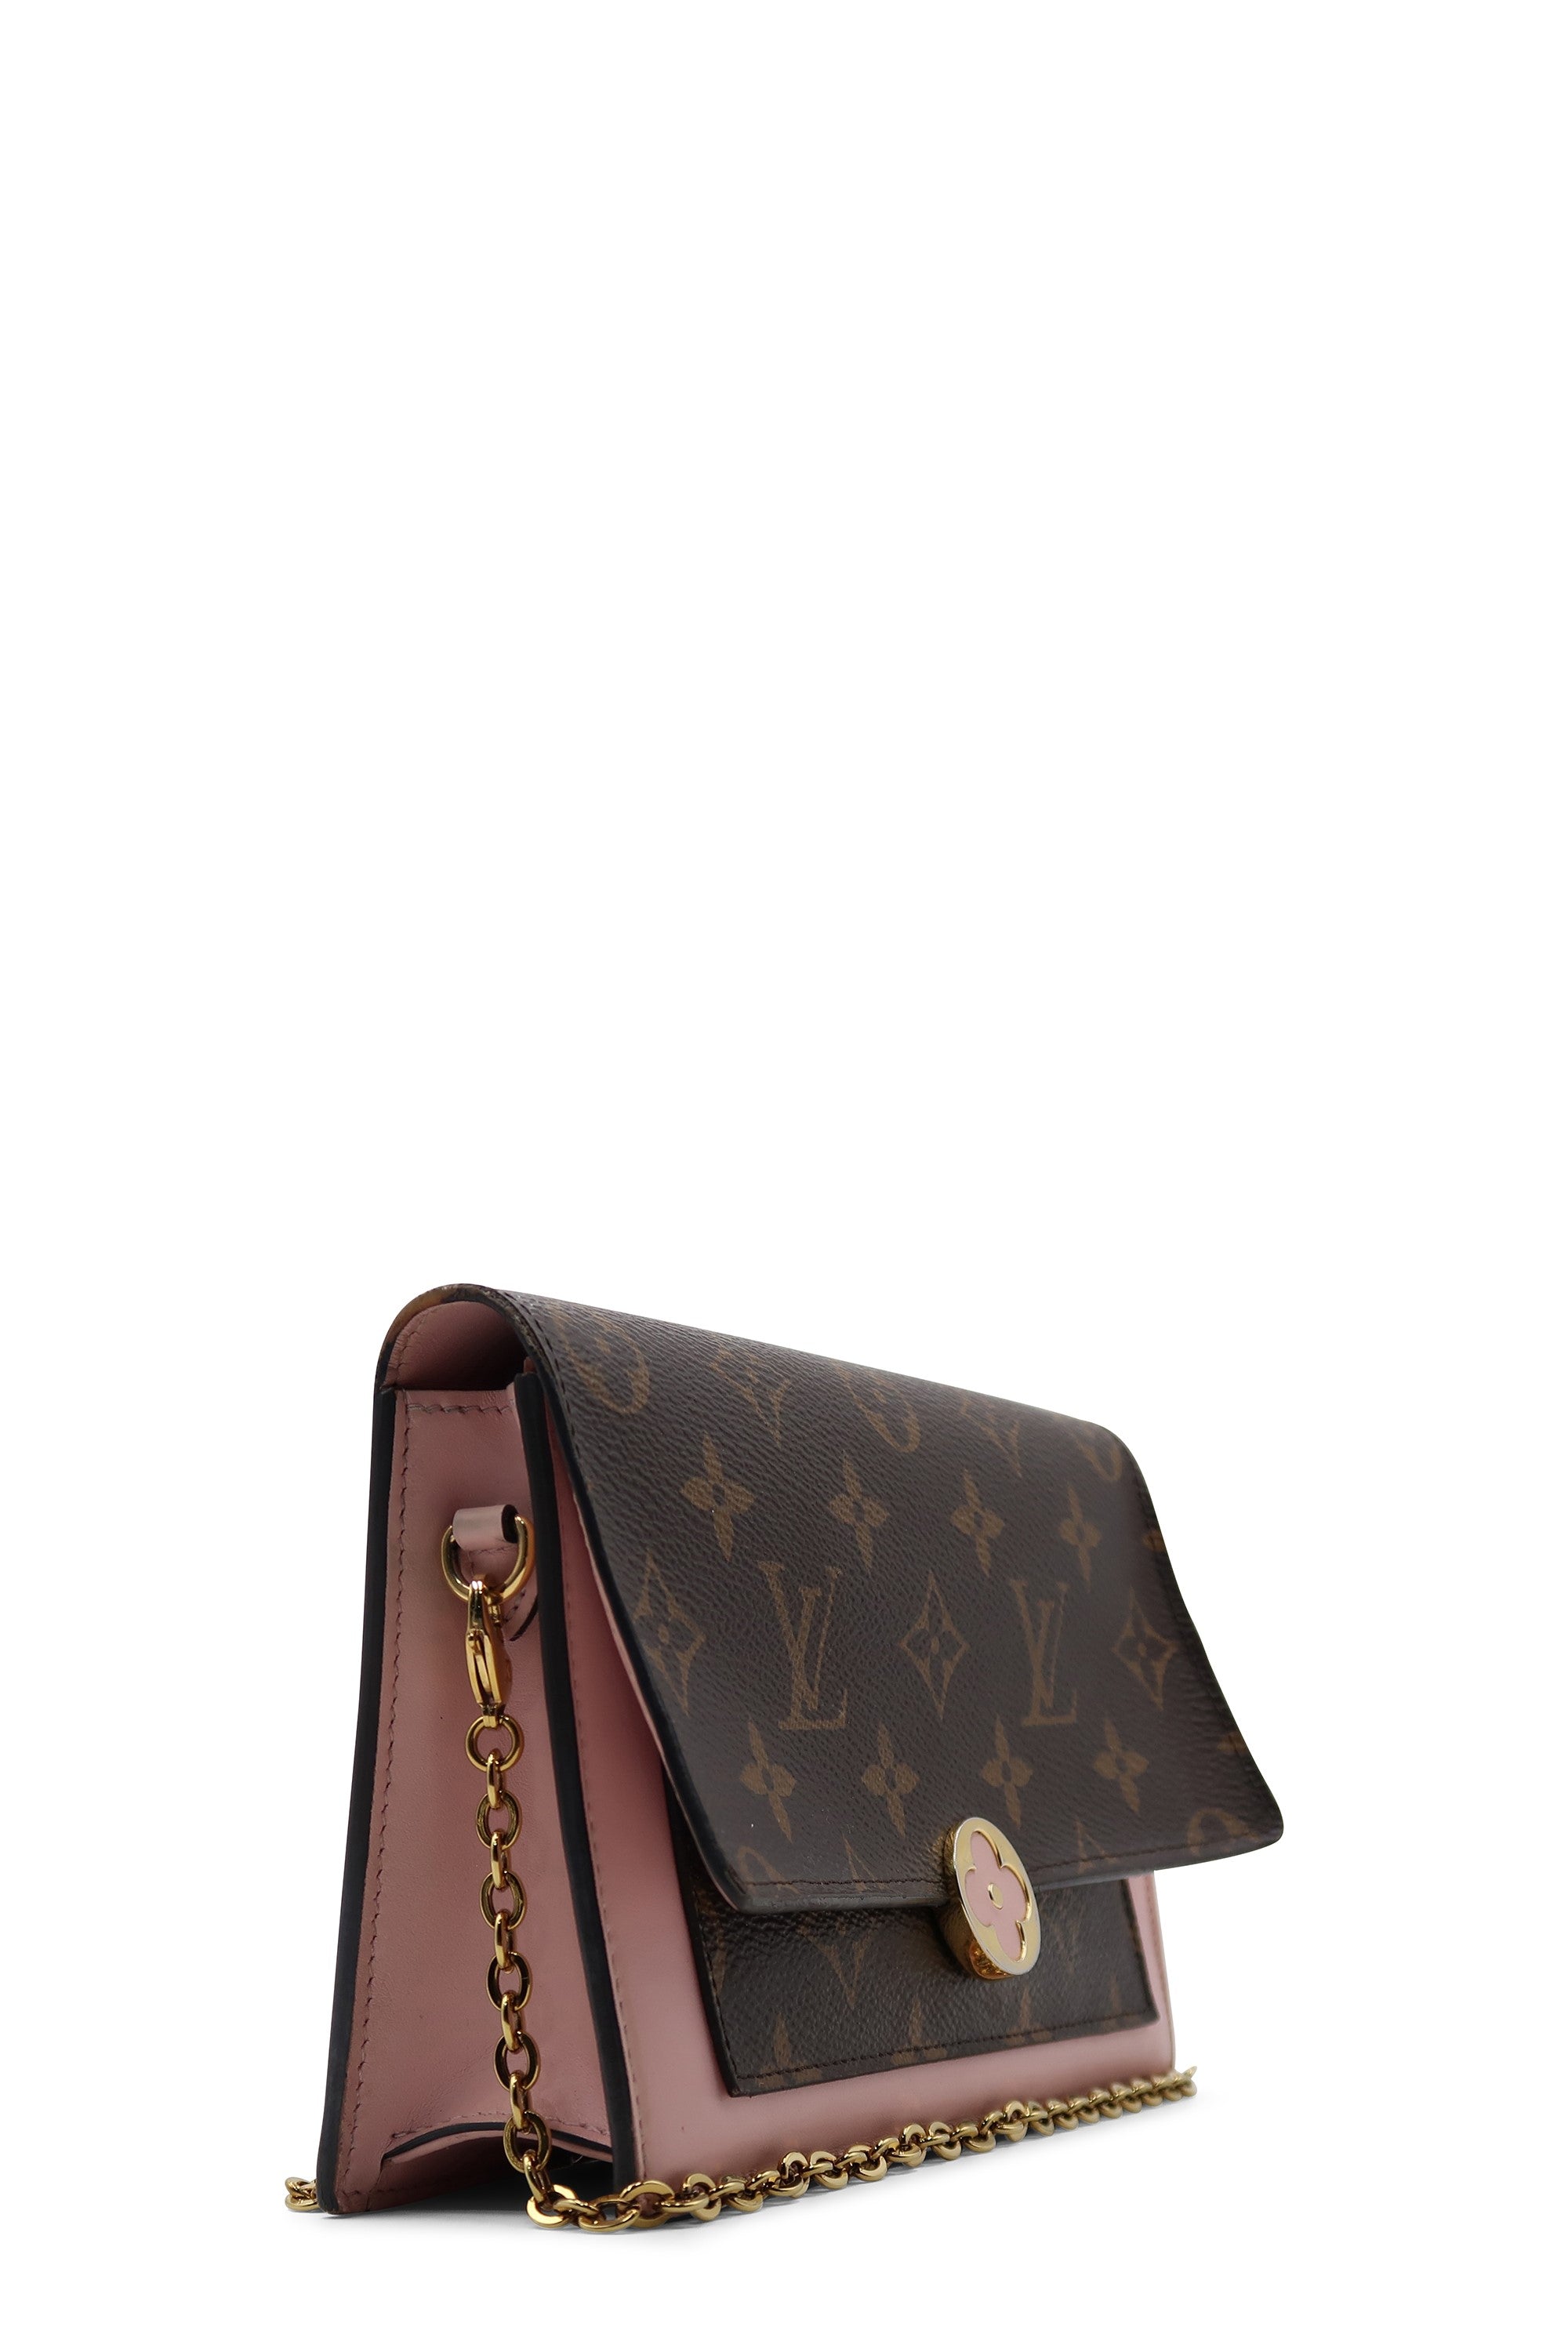 Buy Authentic, Preloved Louis Vuitton Monogram Flore Chain Wallet